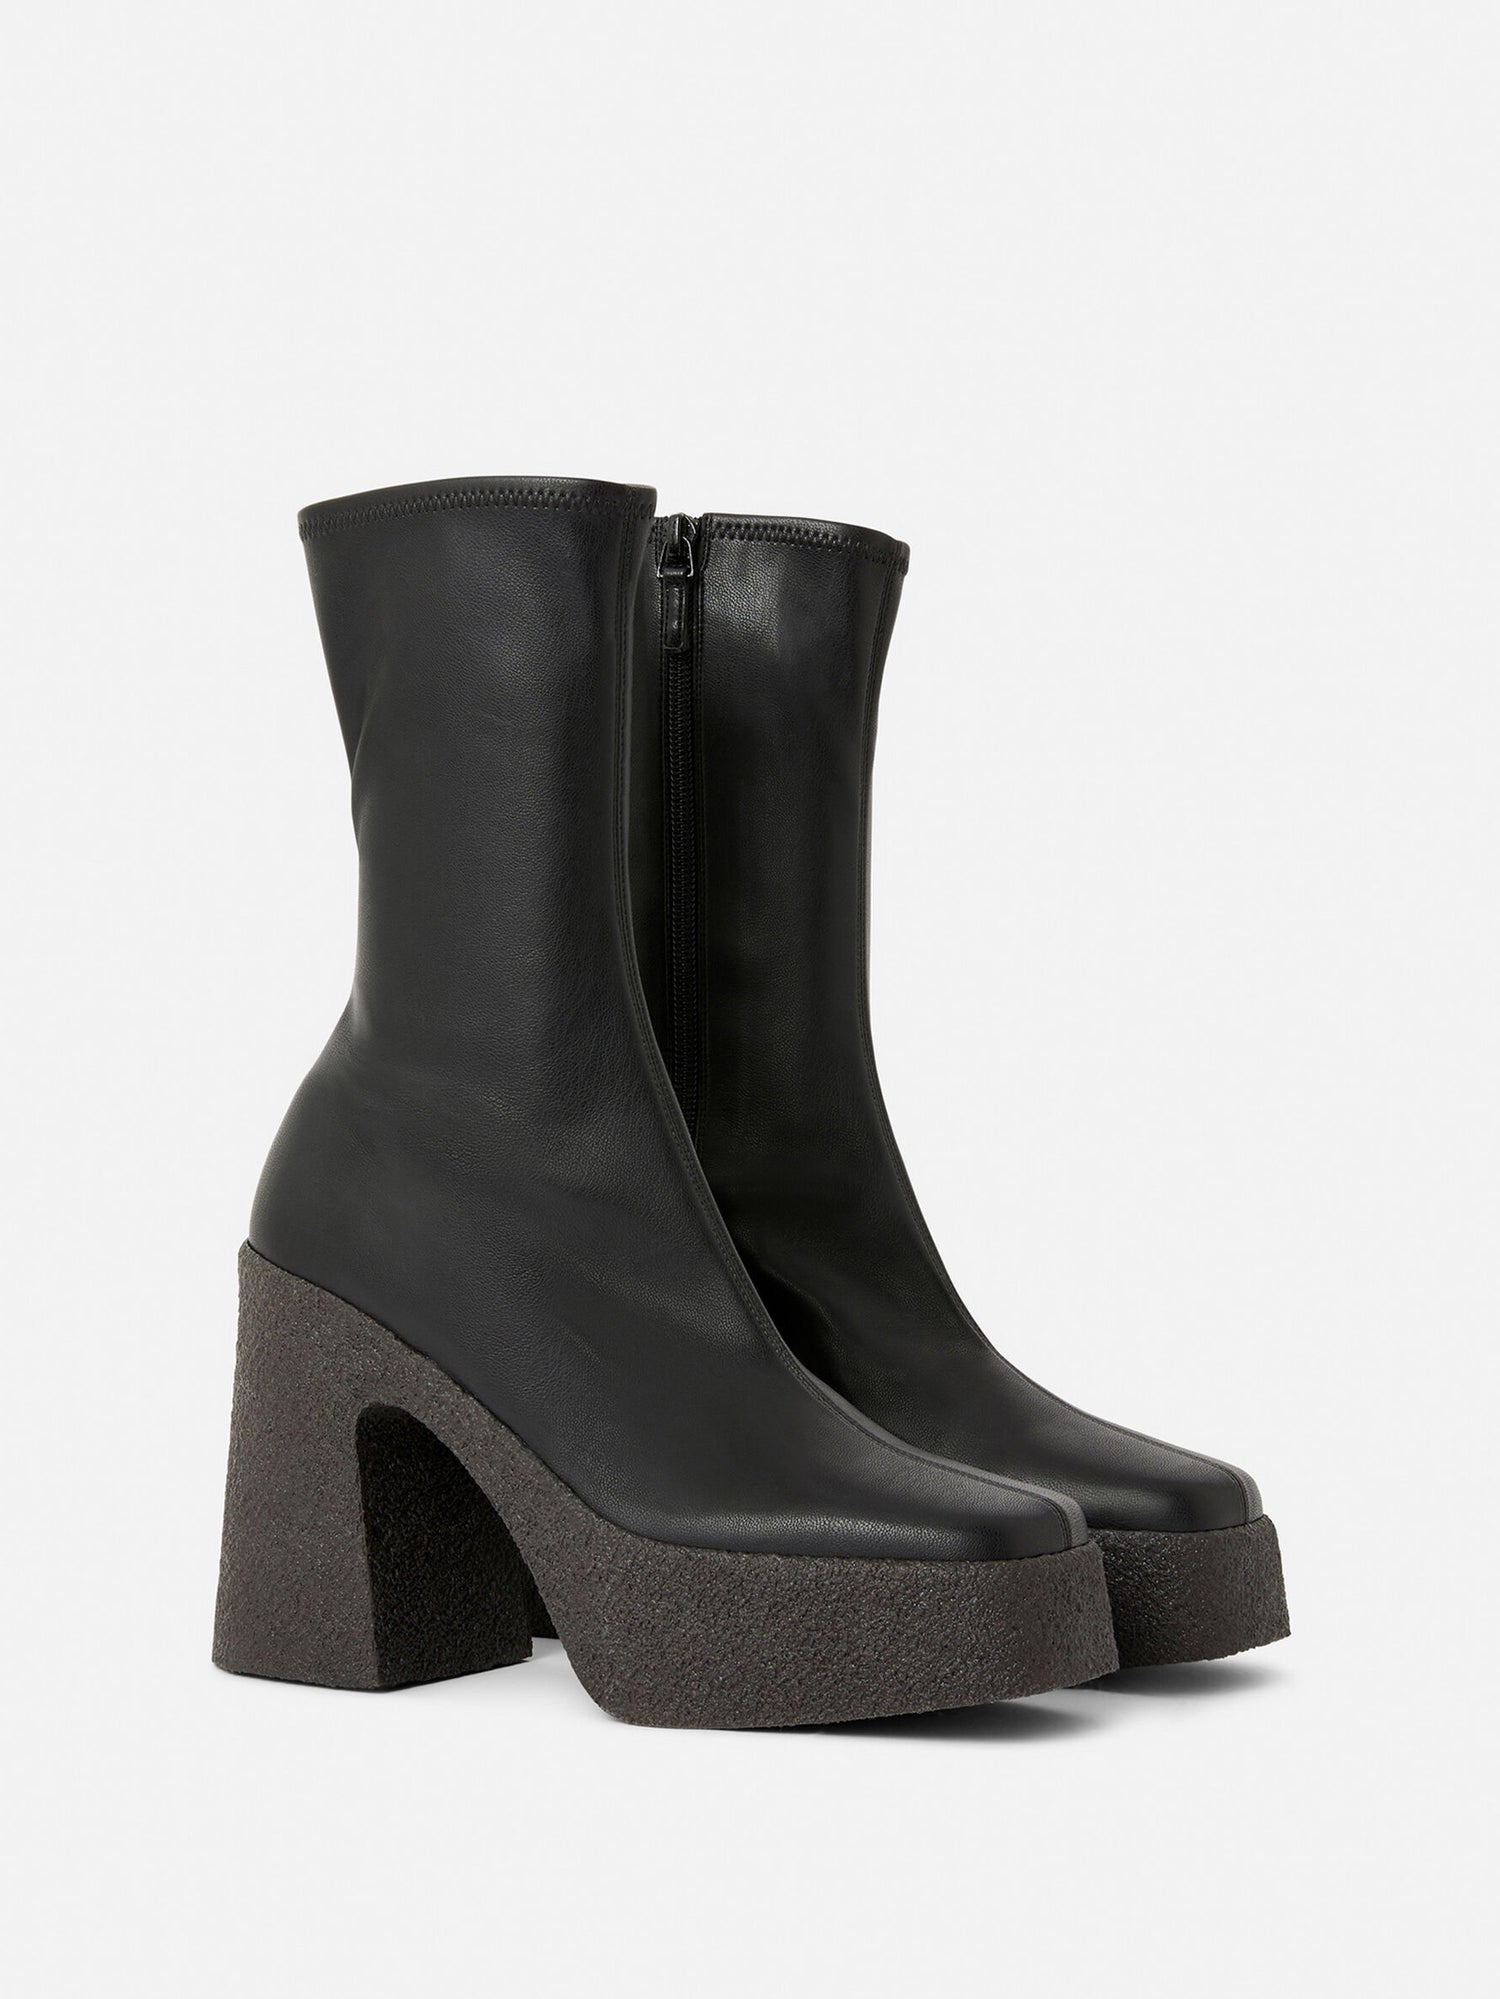 Skyla boots rubber sole pasian, black